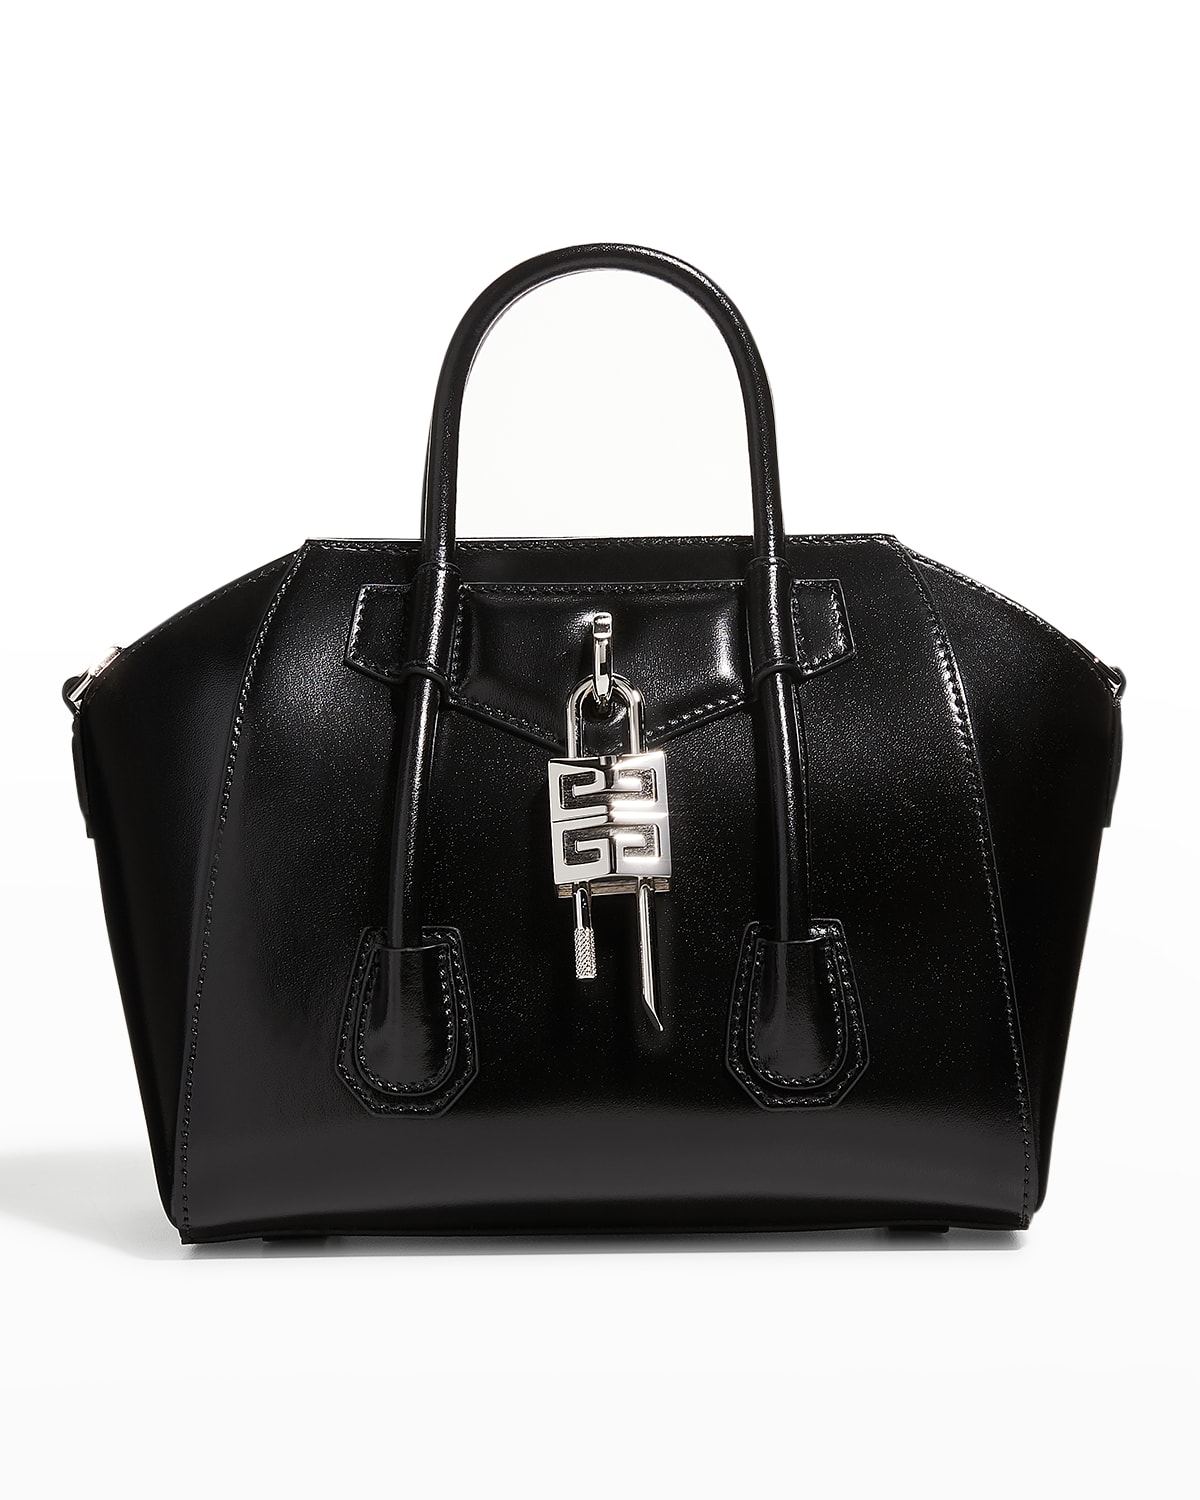 Givenchy Antigona Leather Lock Mini Satchel Bag